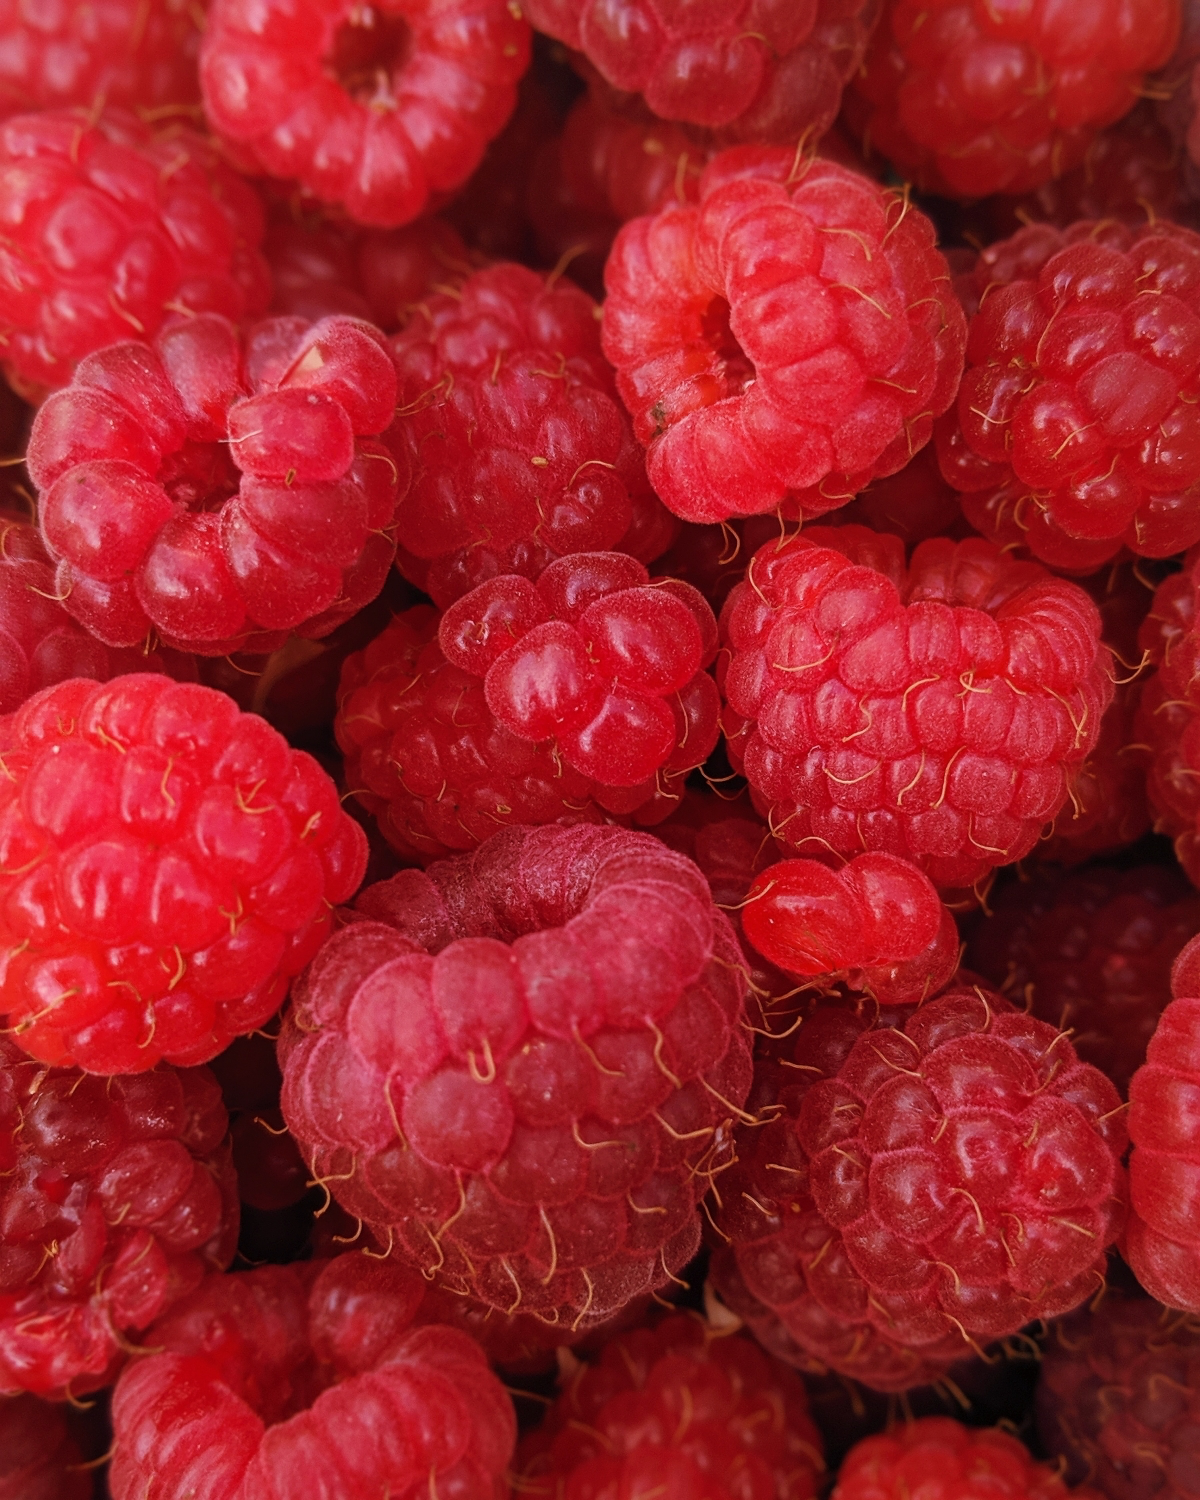 health benefits from eating raspberries